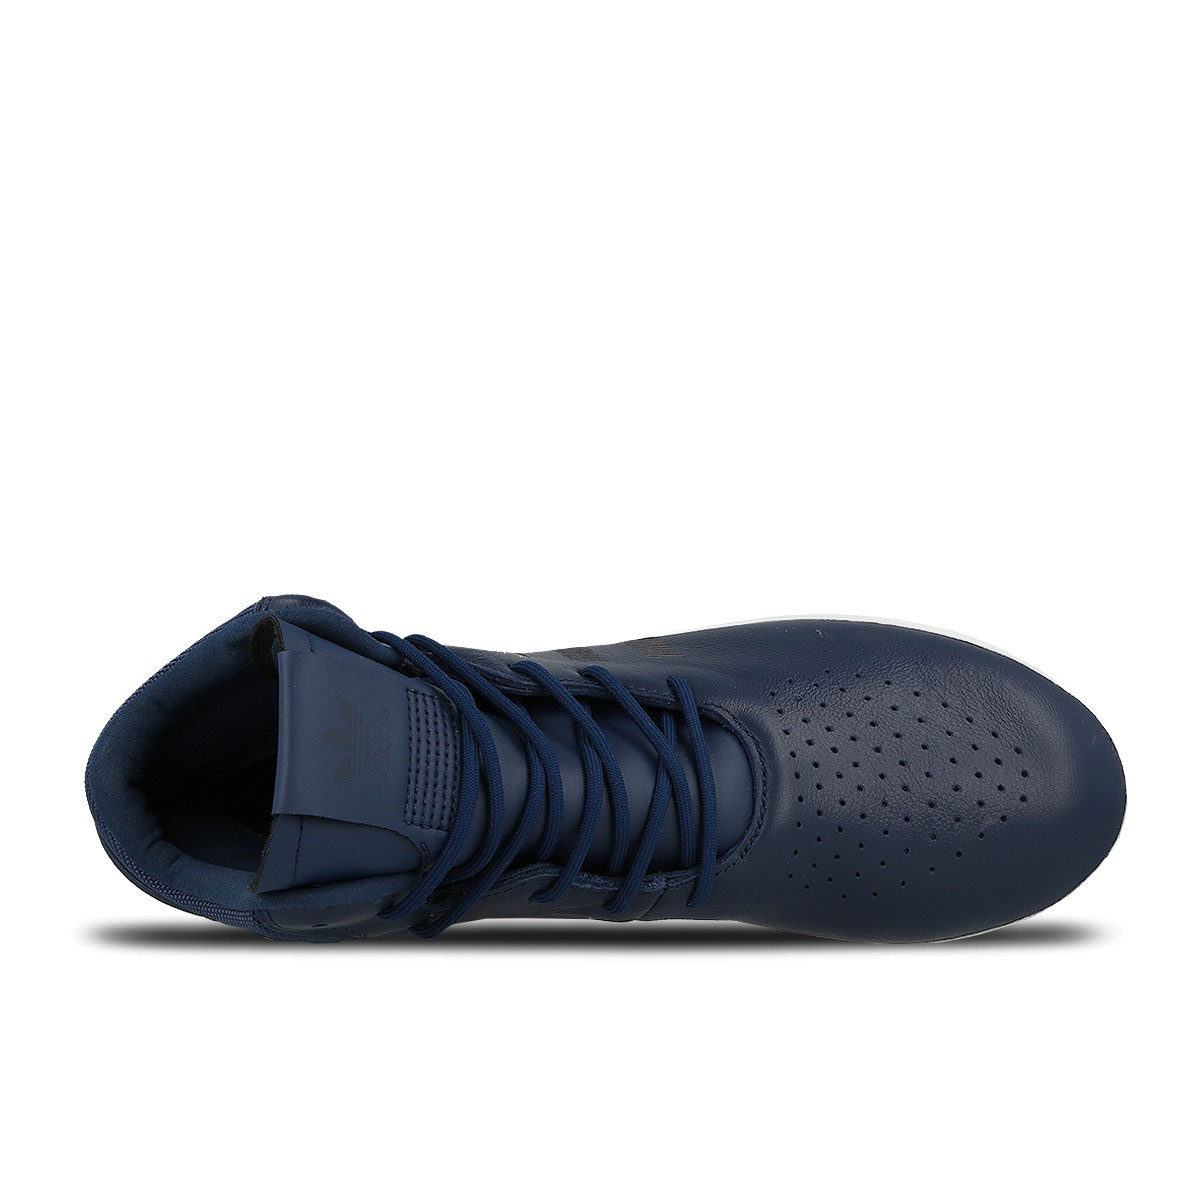 adidas Tubular Invader blue  S81793